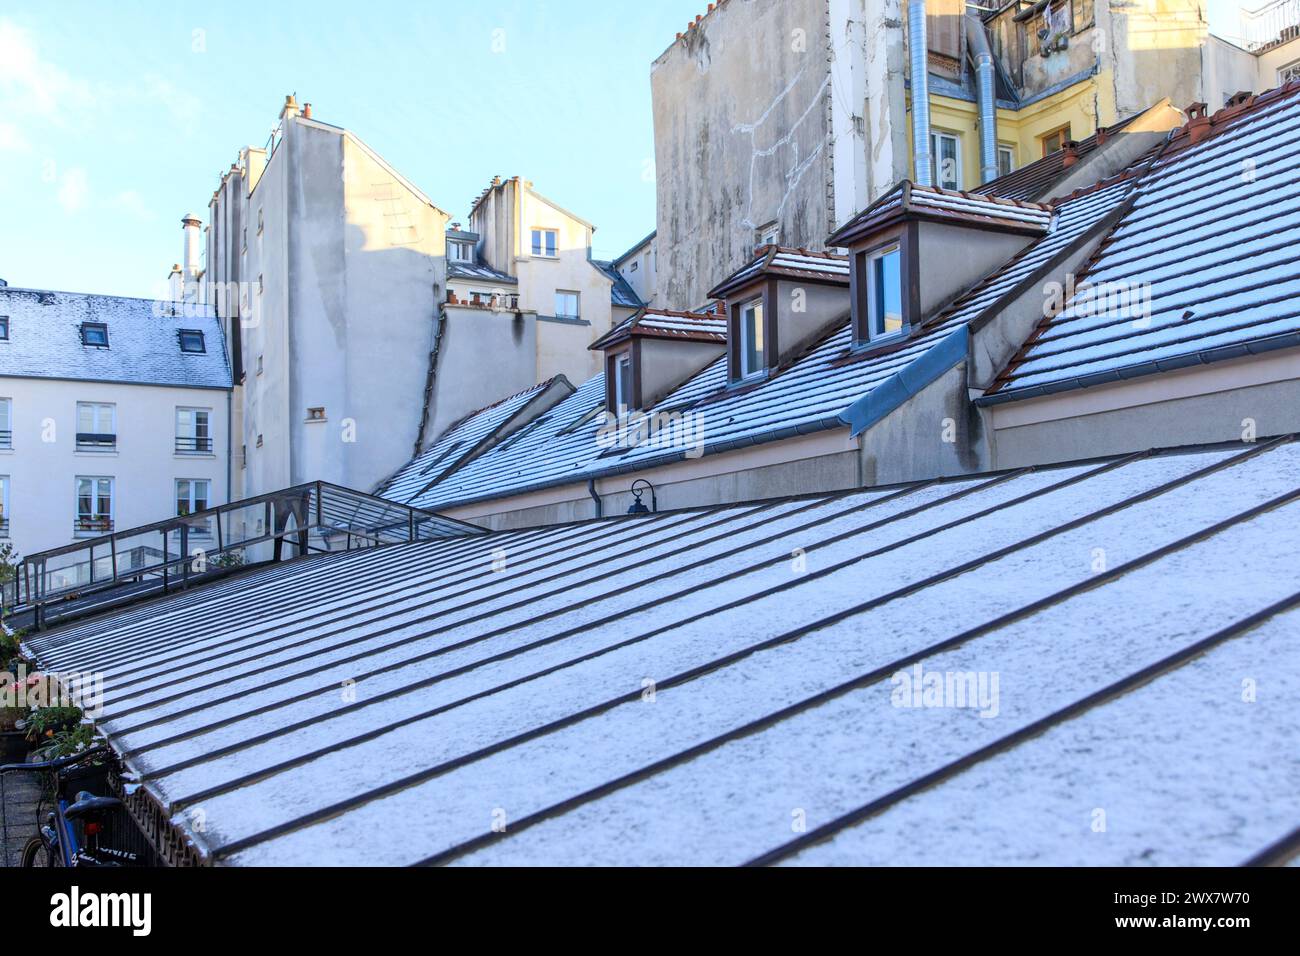 France, Ile-de-France region, Paris, 2nd arrondissement, Passage du Grand Cerf, above the glass roof, in very cold weather, Stock Photo